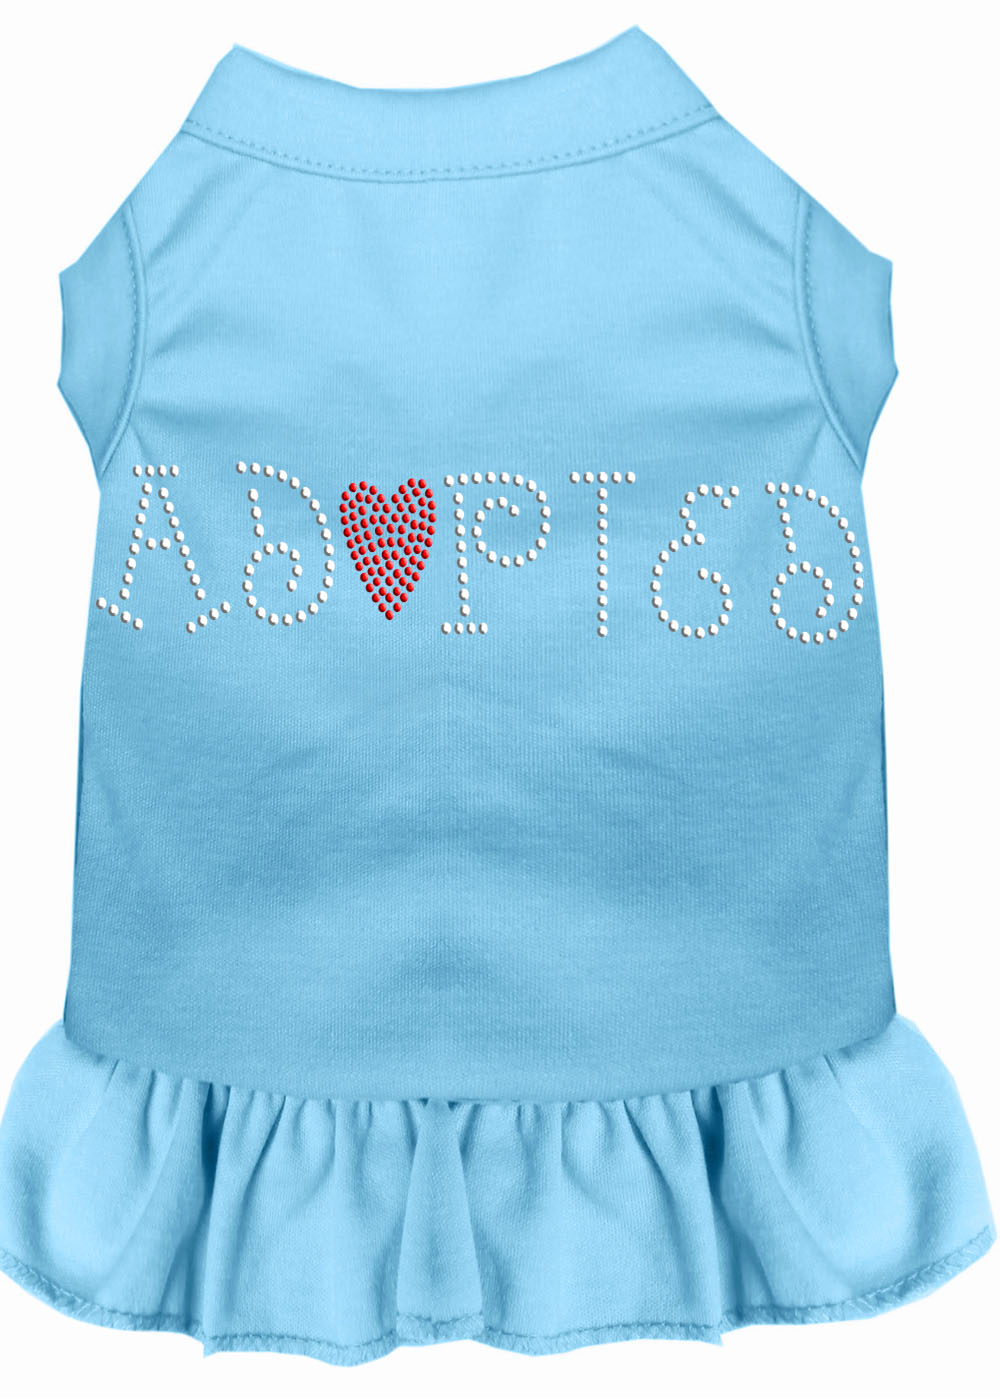 Adopted Rhinestone Dress Baby Blue Lg